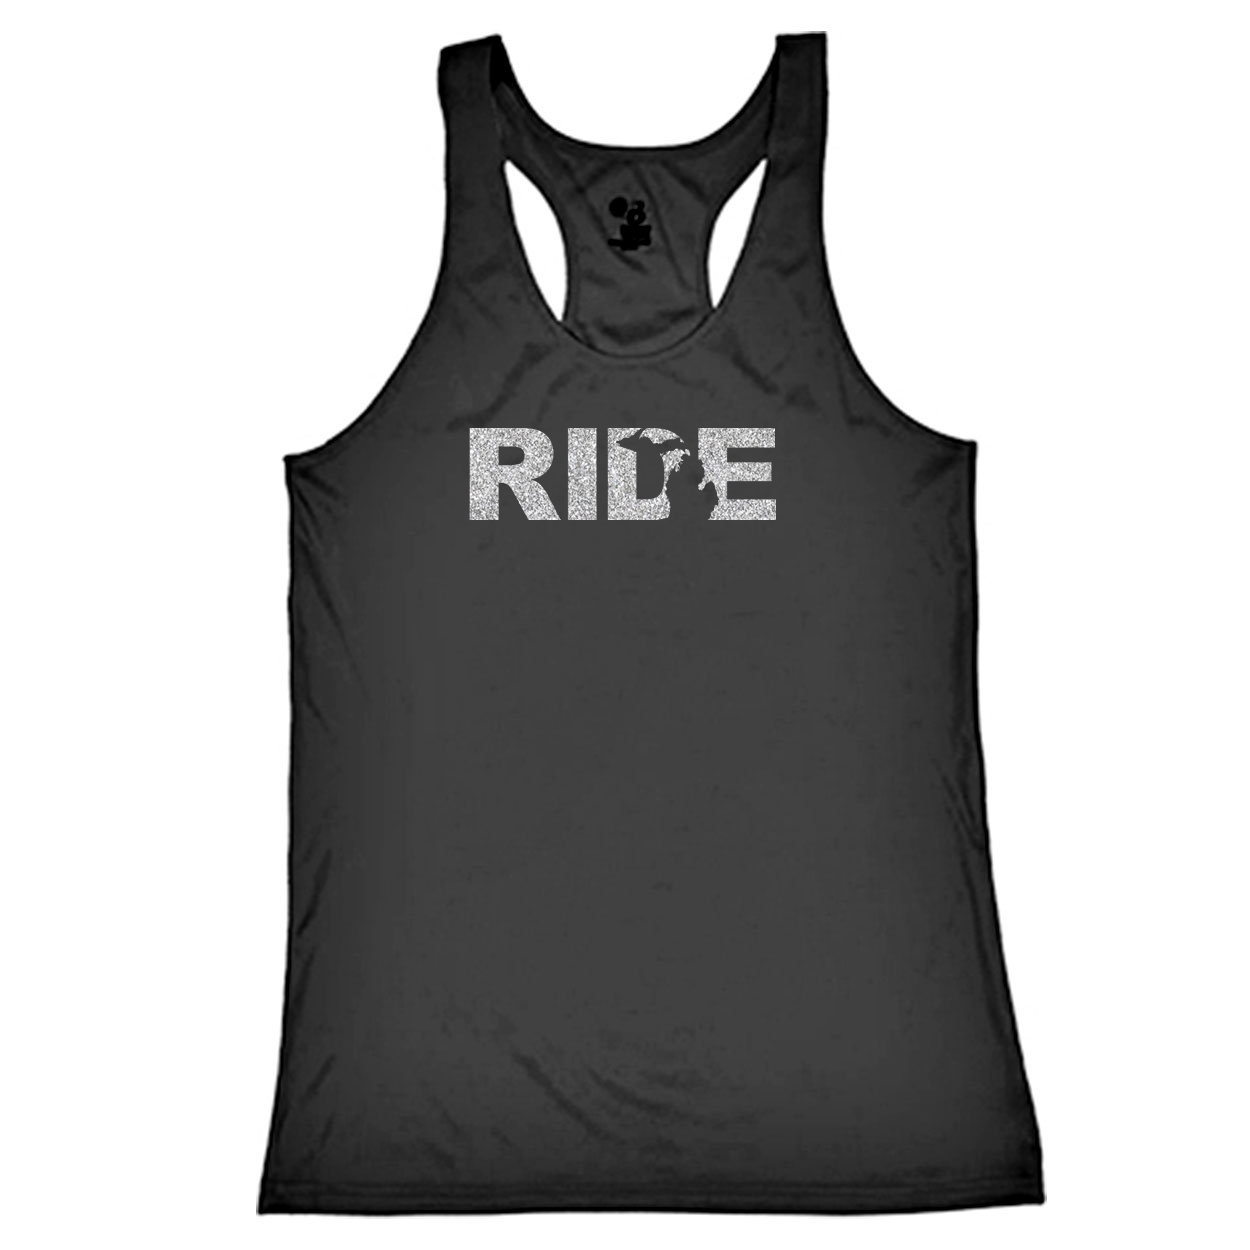 Ride Michigan Classic Youth Girls Performance Racerback Tank Top Black (Glitter Silver Logo)